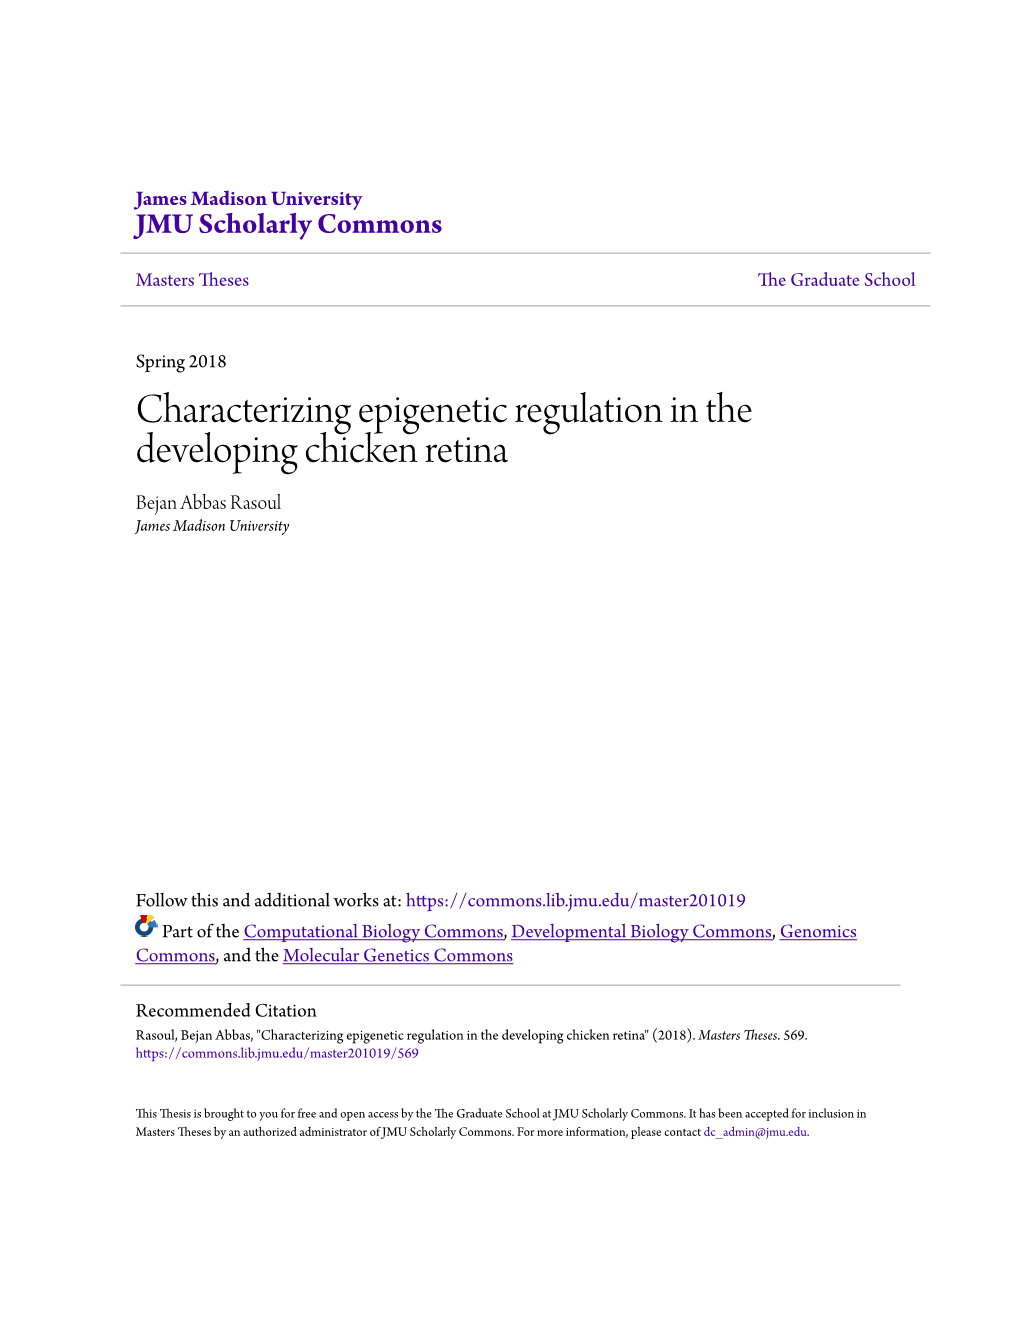 Characterizing Epigenetic Regulation in the Developing Chicken Retina Bejan Abbas Rasoul James Madison University